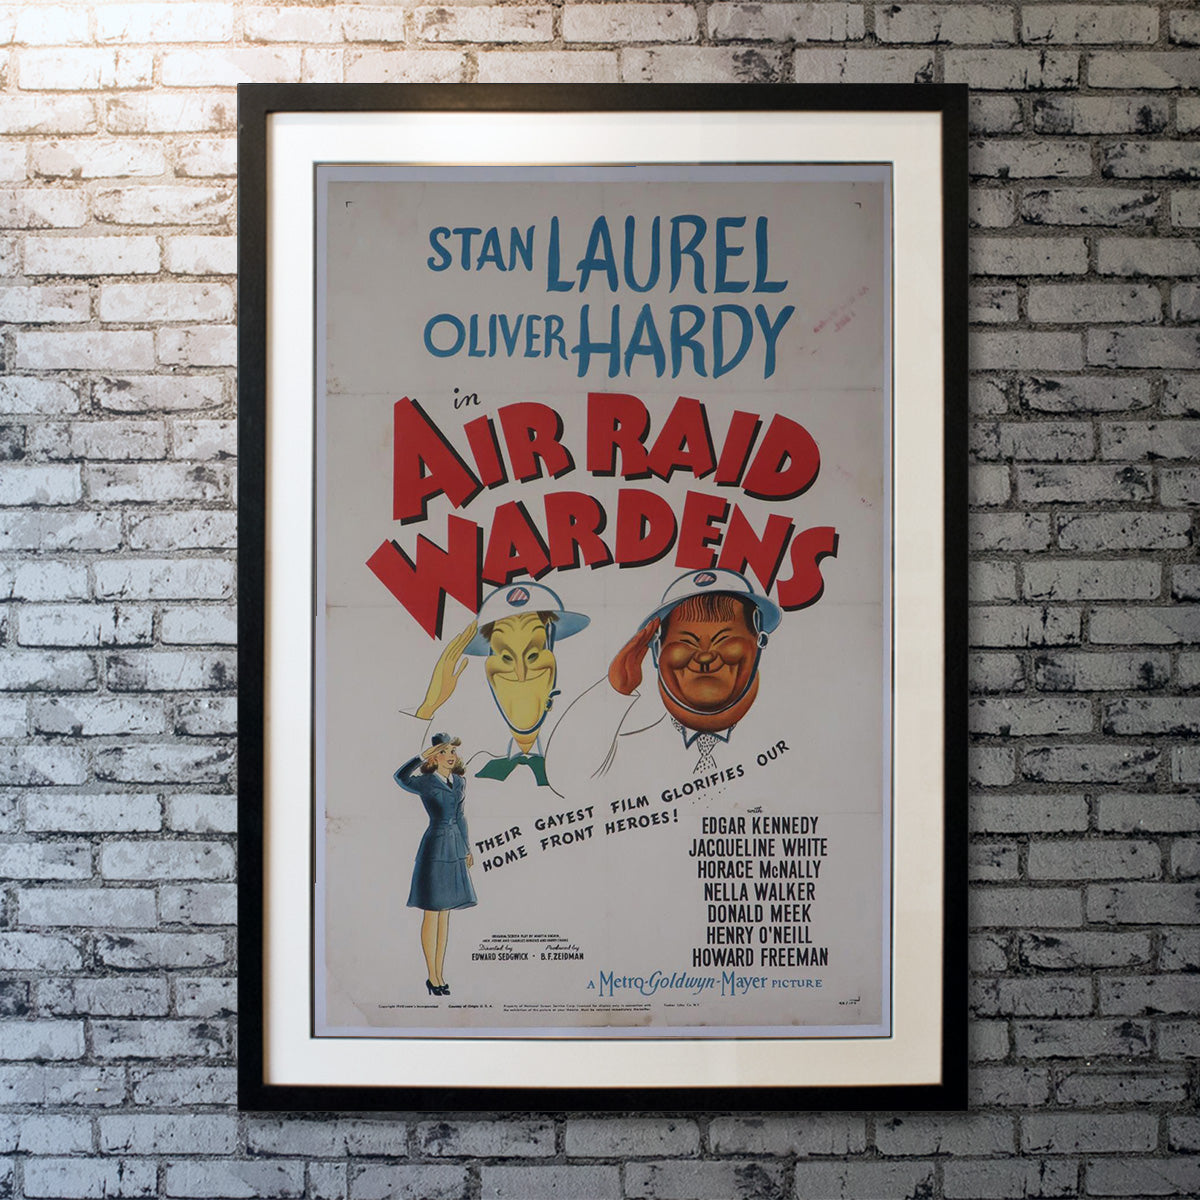 Original Movie Poster of Air Raid Wardens (1943)